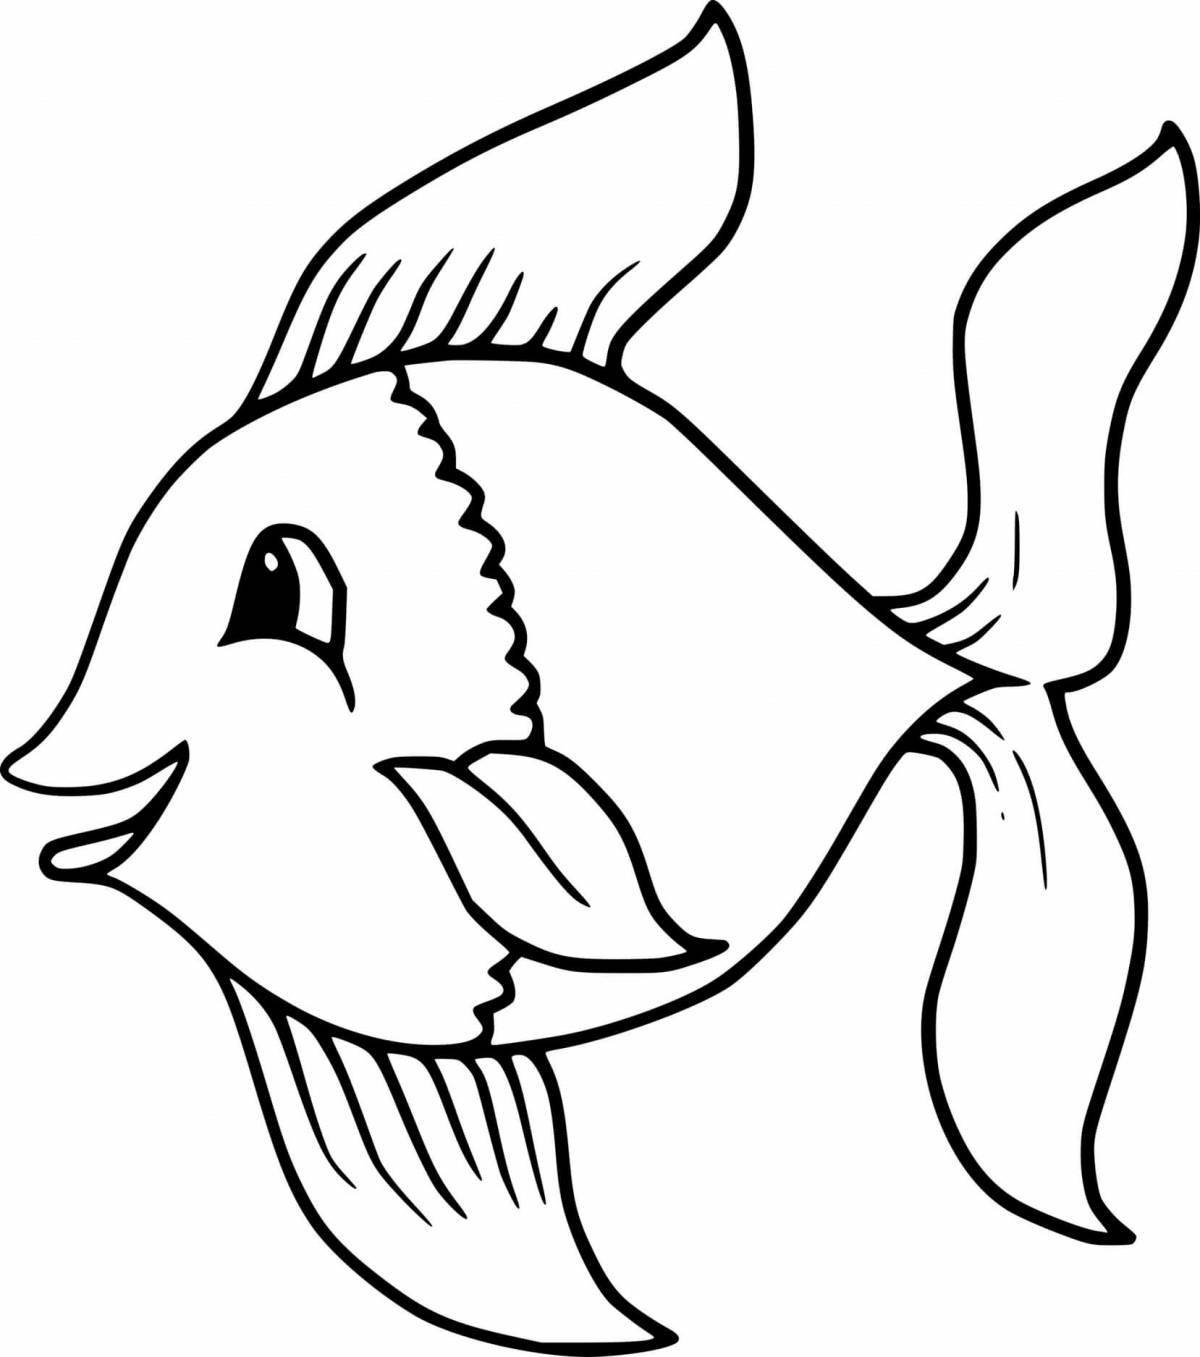 Bright simple fish coloring book